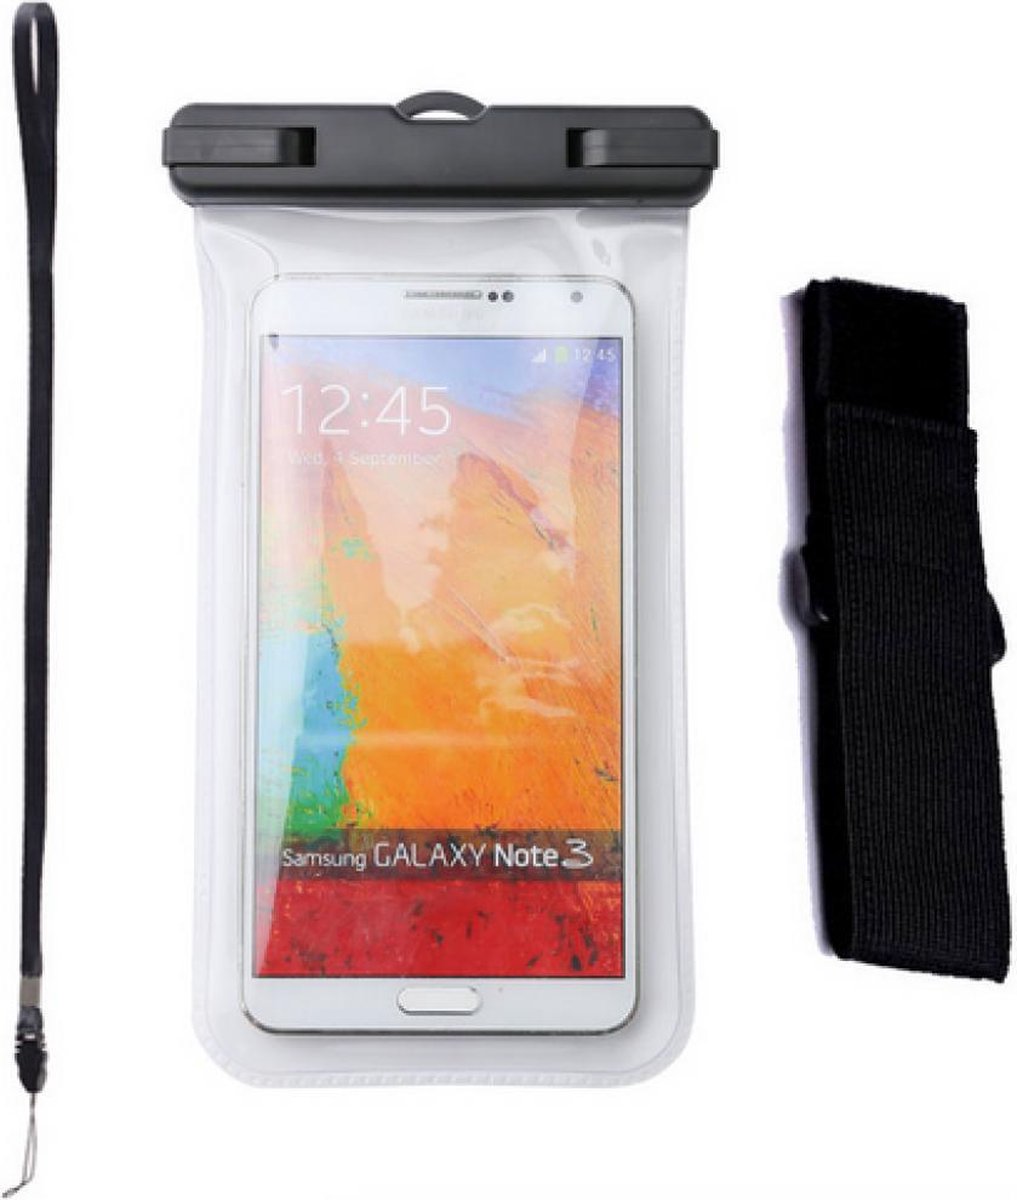 Waterproof bag hoes etui Wit voor telefoon voor iPhone, Samsung Galaxy, LG, HTC etc